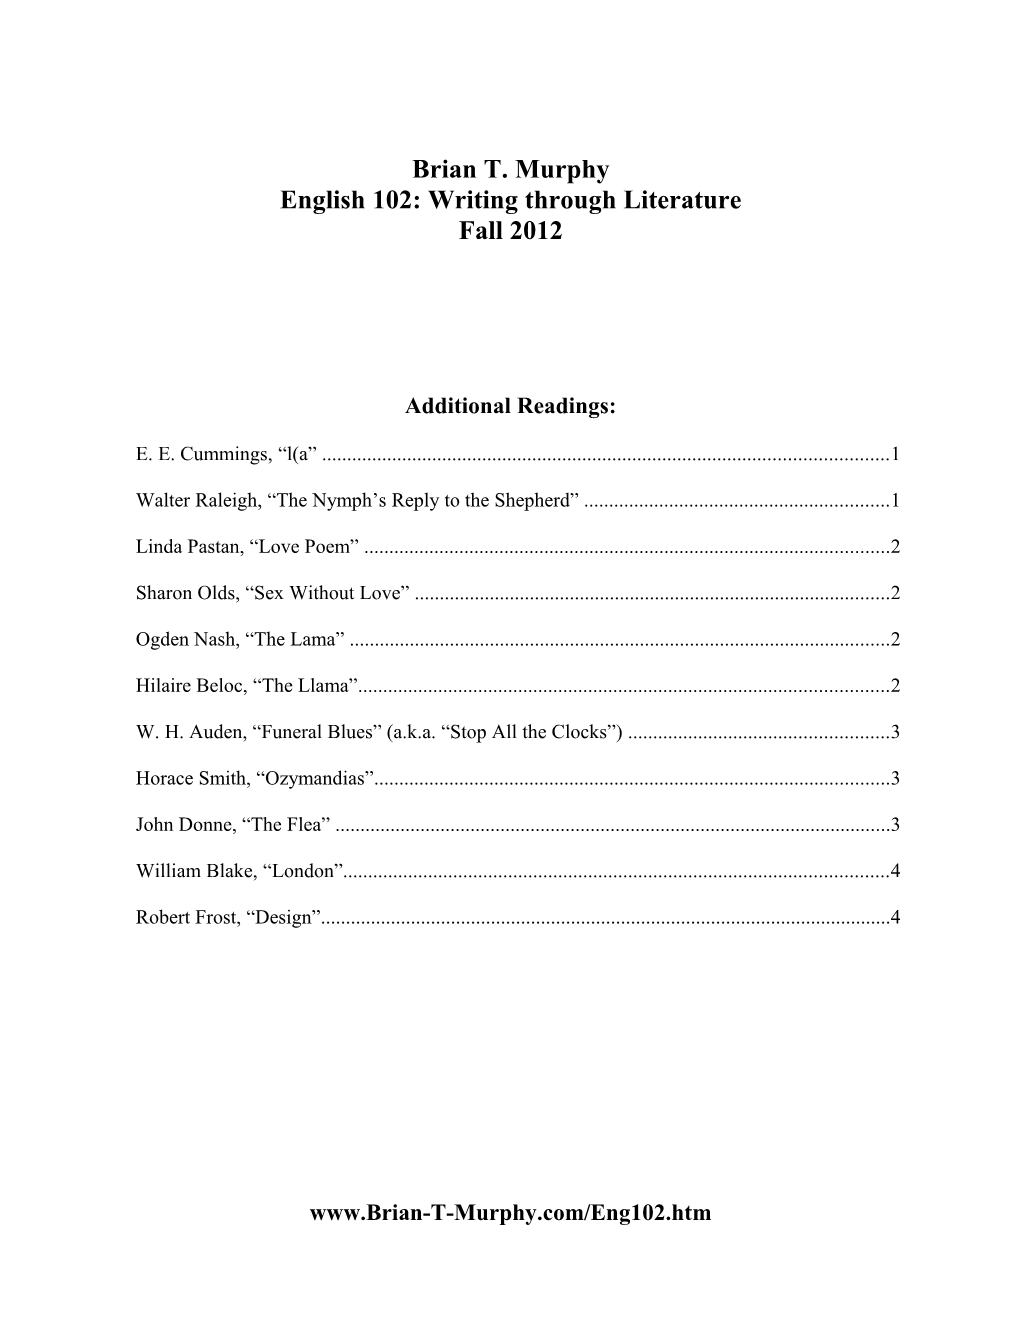 English 102: Writing Through Literature